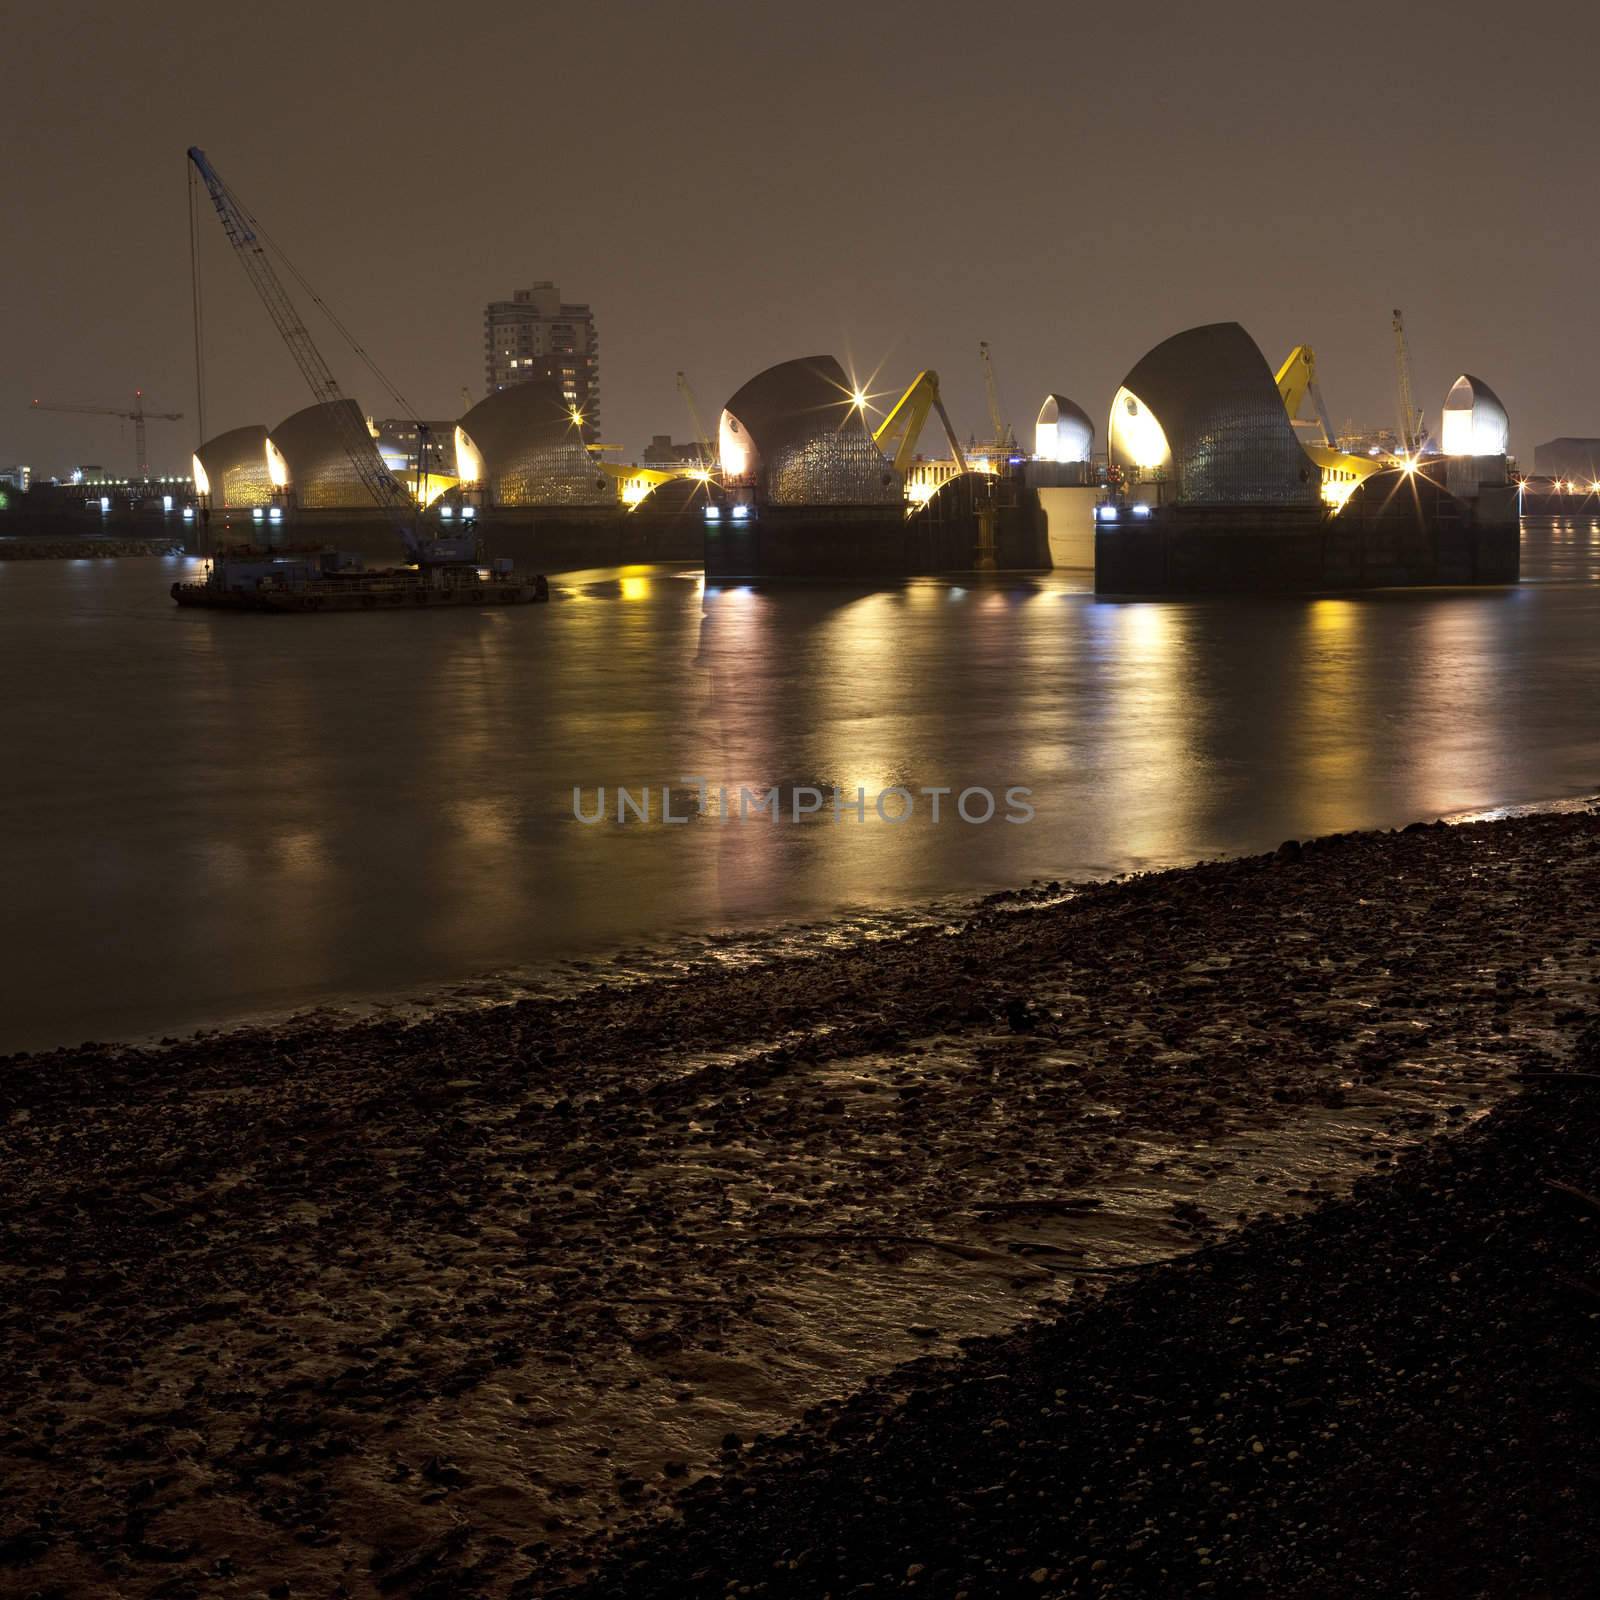 Thames Barrier at Night by chrisdorney